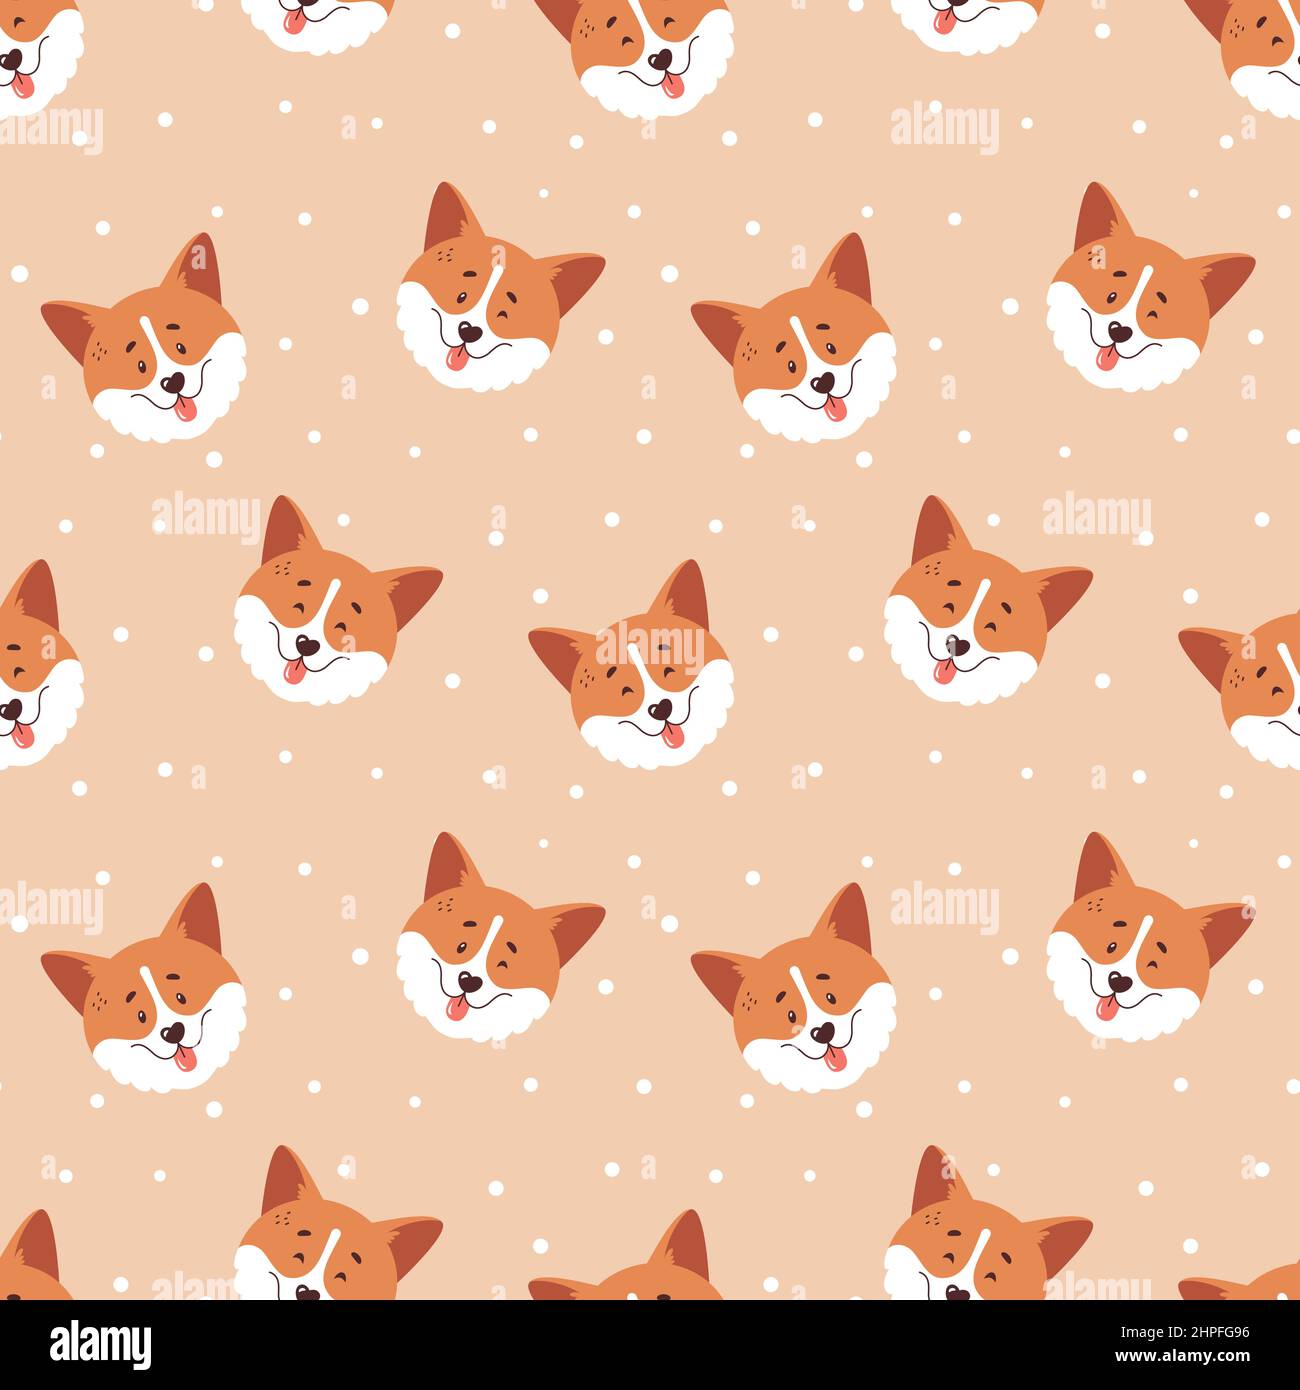 Corgi seamless pattern. Cute smiling welsh corgi faces and polka dot background. Happy dog characters. Vector illustration. Stock Vector